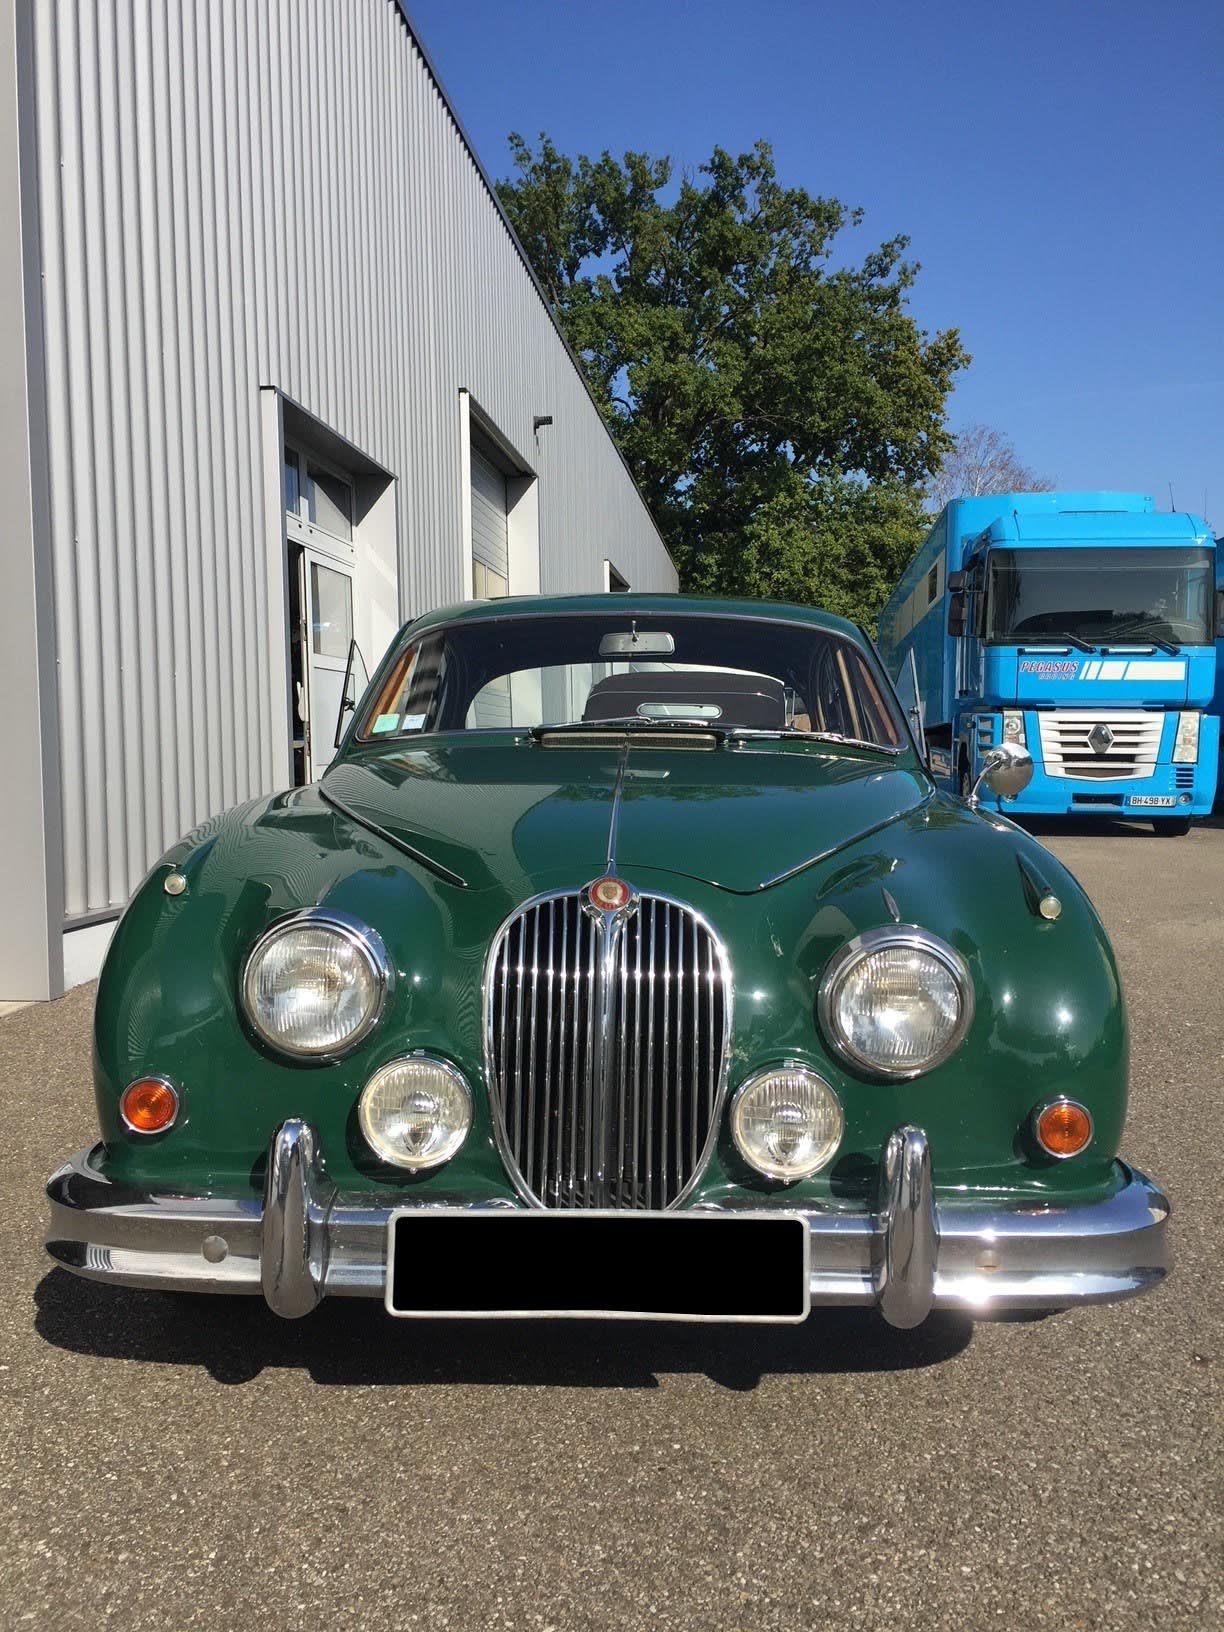 1962 Jaguar MK2 3.8 litres Serial number: P219431BW

Box 5 Getrag

The first Jag&hellip;